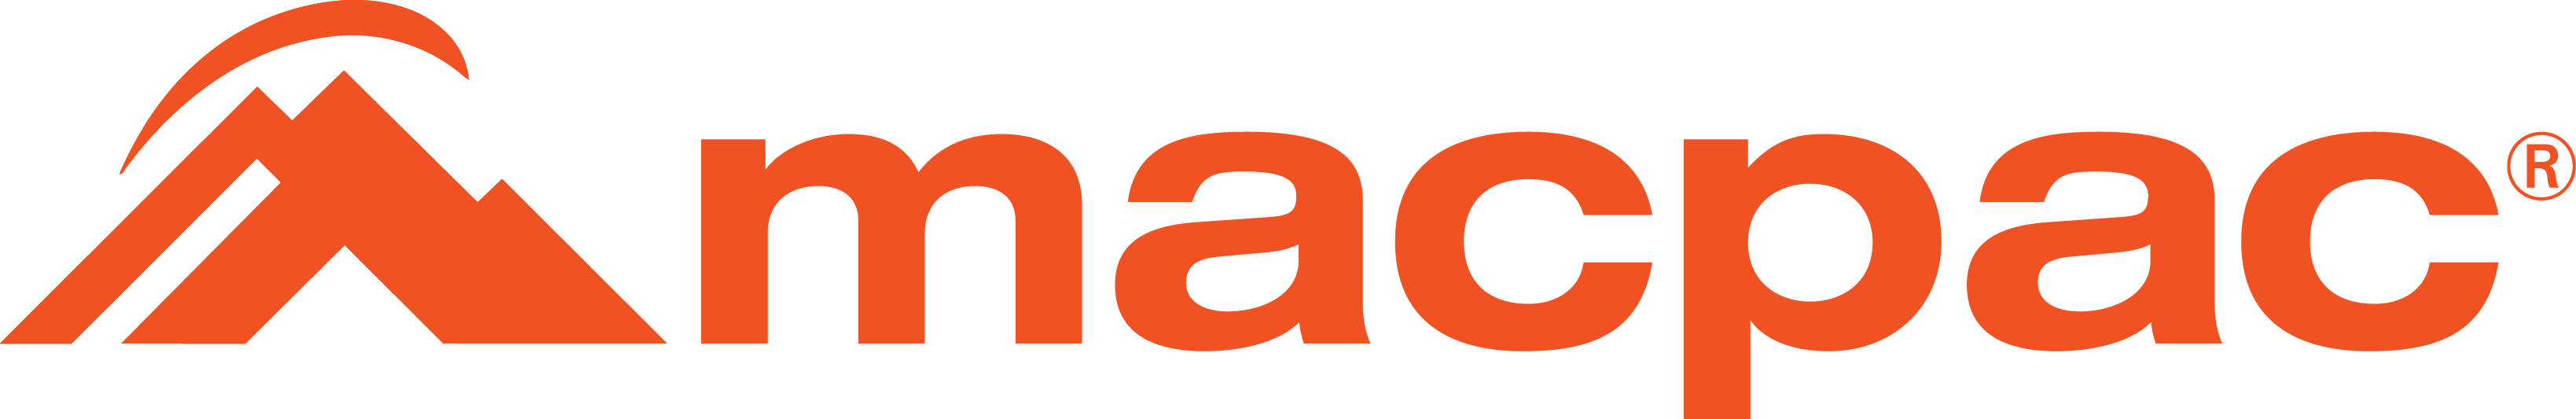 Macpac Logo 2015 Orange